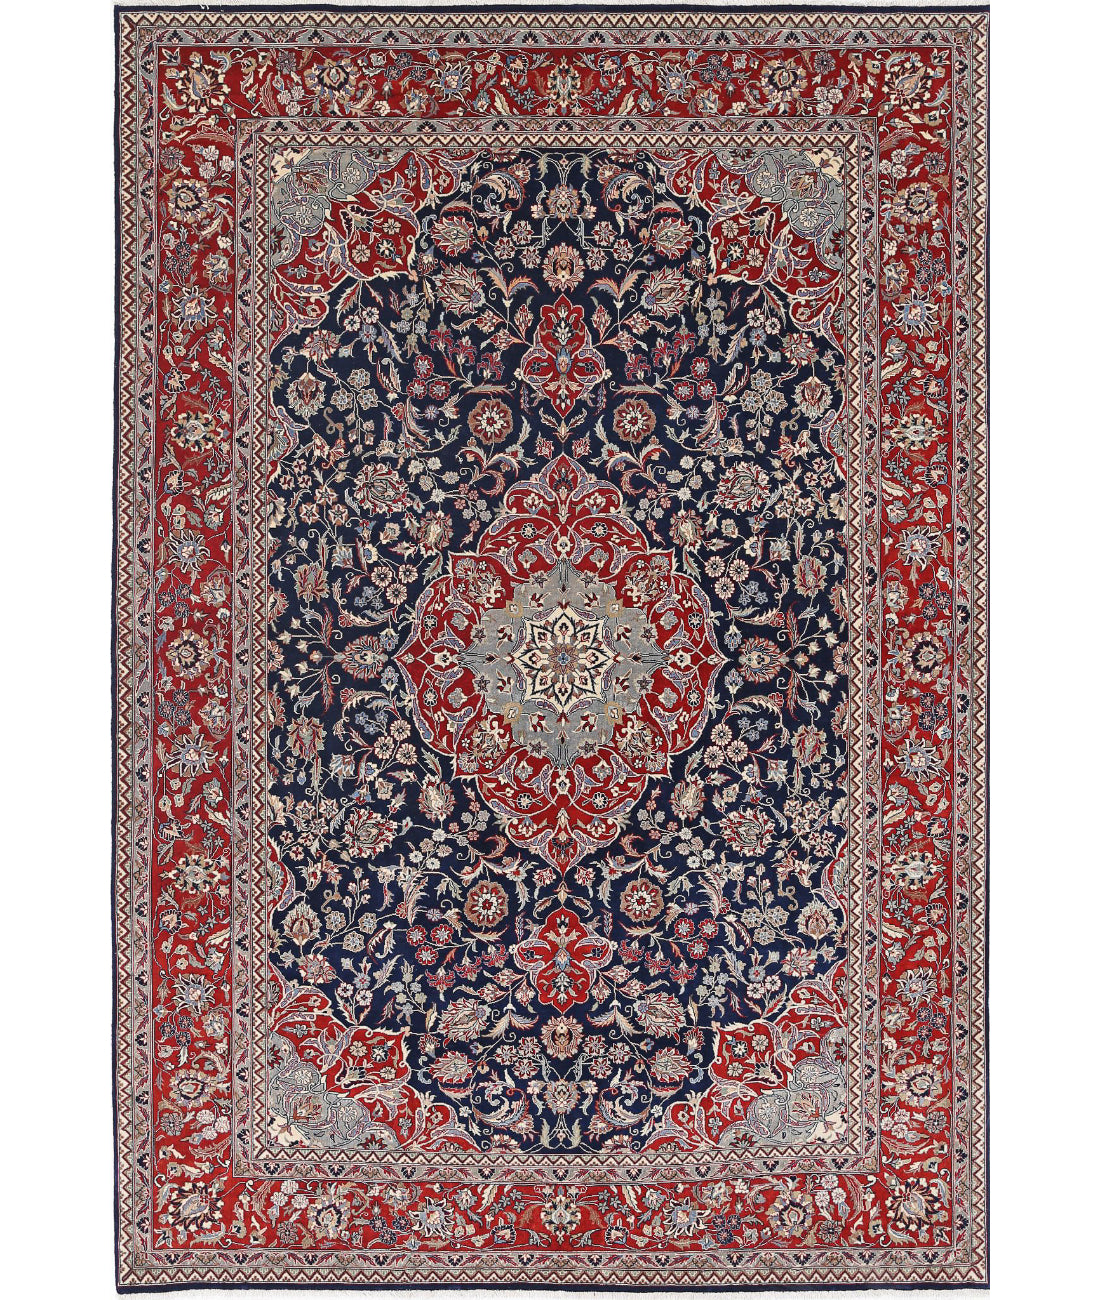 Heritage-hand-knotted-pak-persian-fine-wool-rug-5025326.jpg